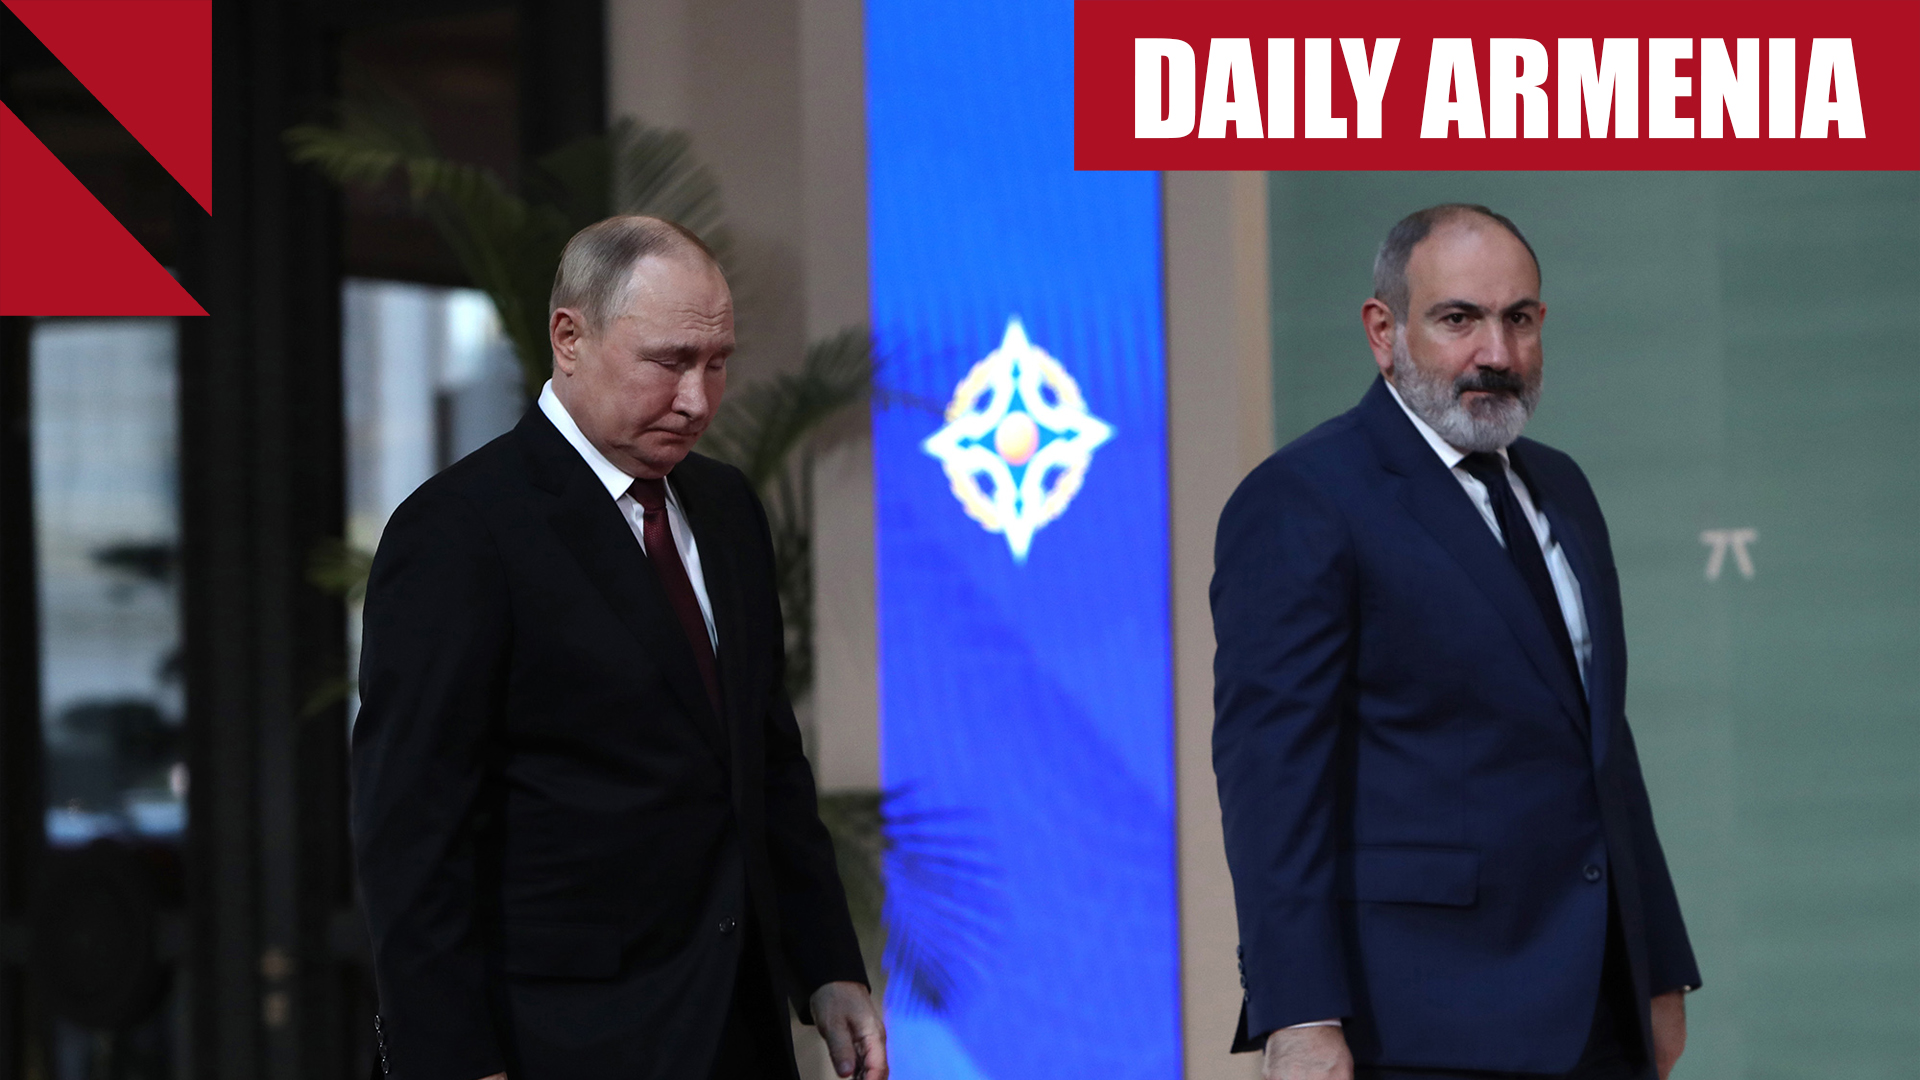 Russia says Armenia needs to make a choice on future of alliance